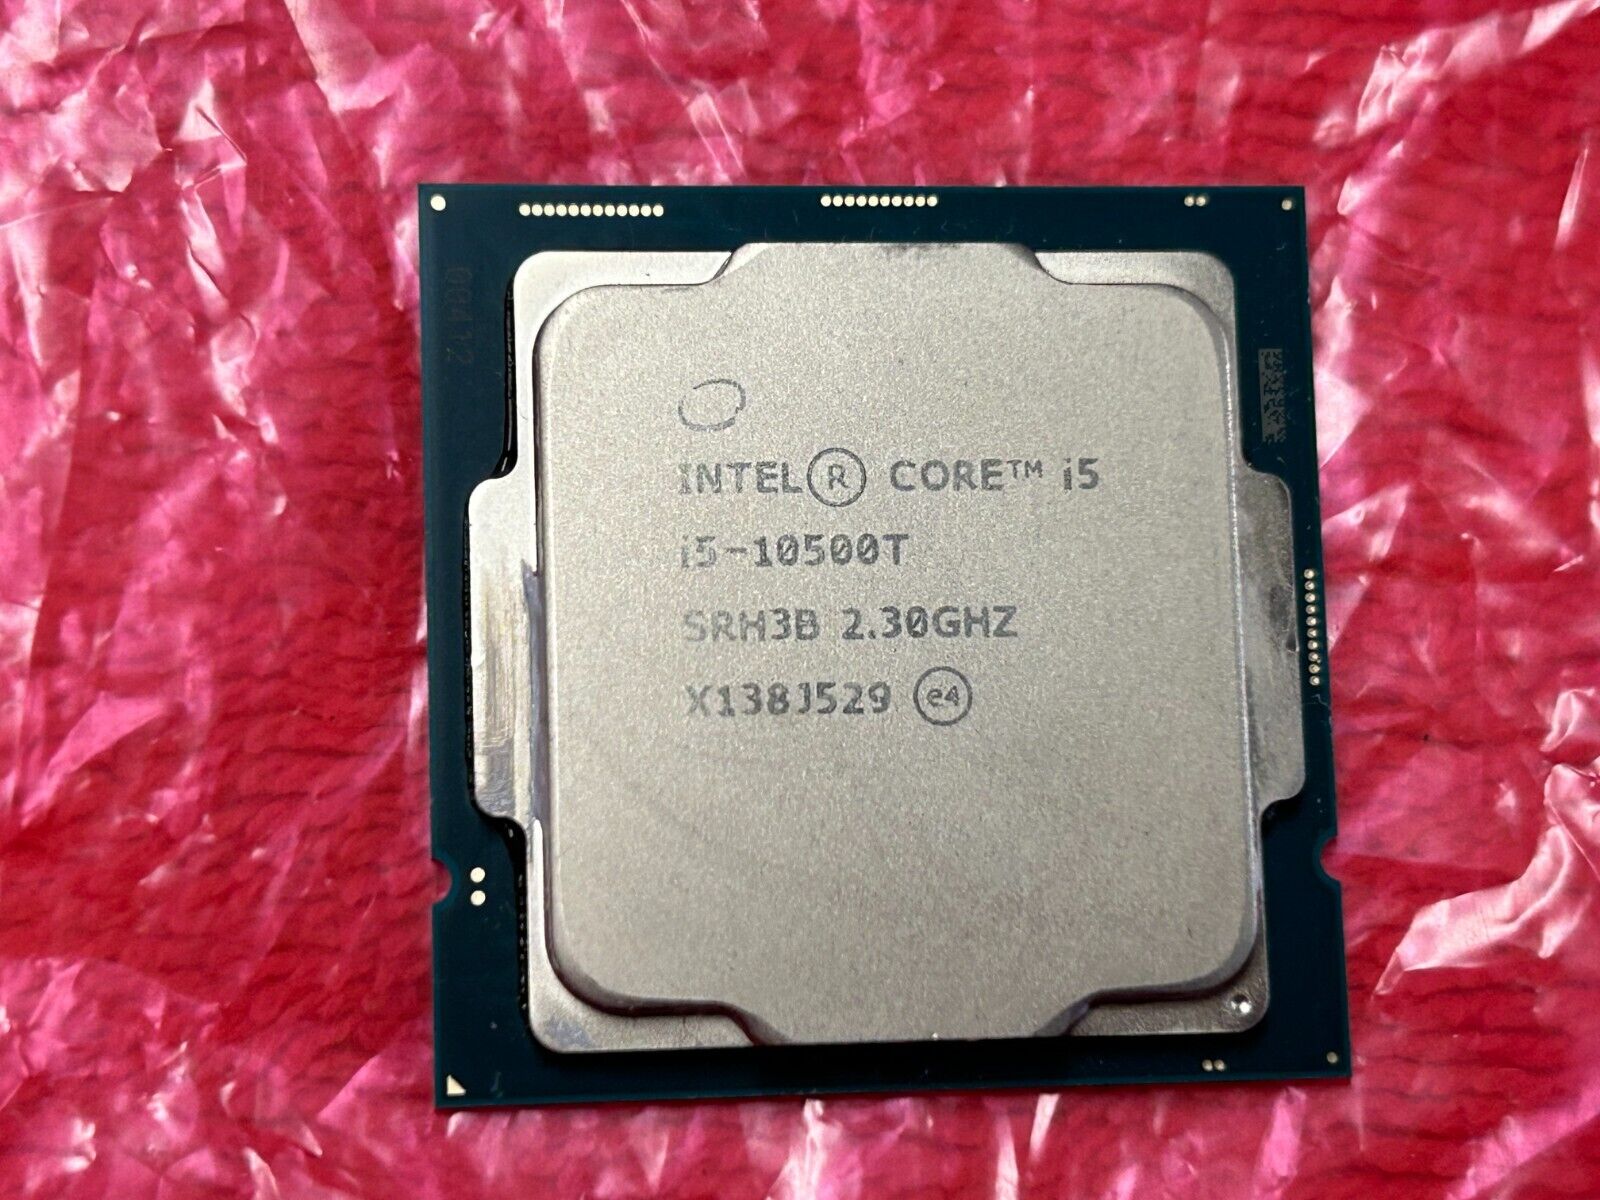 Intel Core i5-13500T - 2.3GHz Processor  Desktop Processor SRH3B